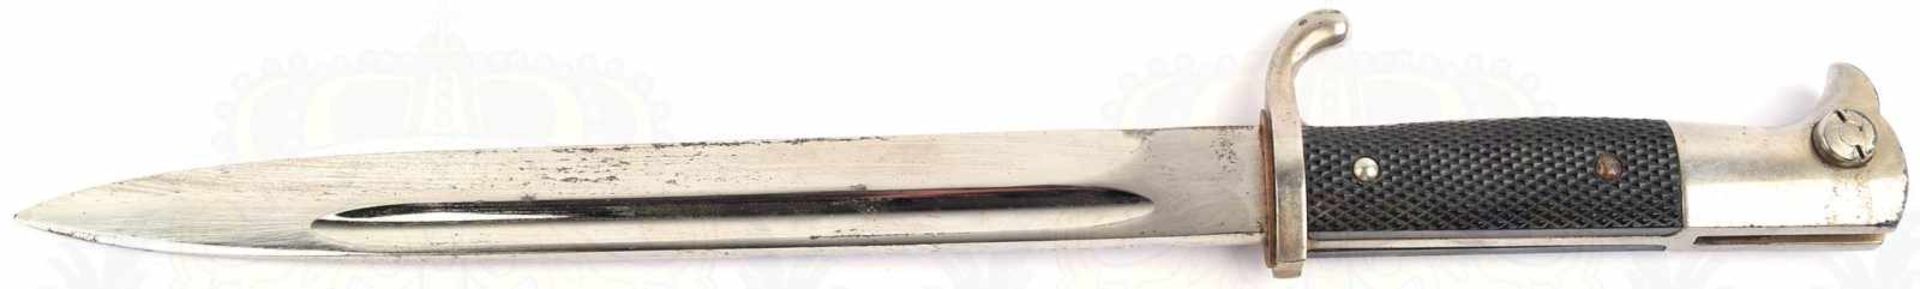 SG 98, Extrastück, vernickelte Klinge m. beids. Hohlbahn, L. 25cm, minimal narbig, vernickelte - Bild 2 aus 3